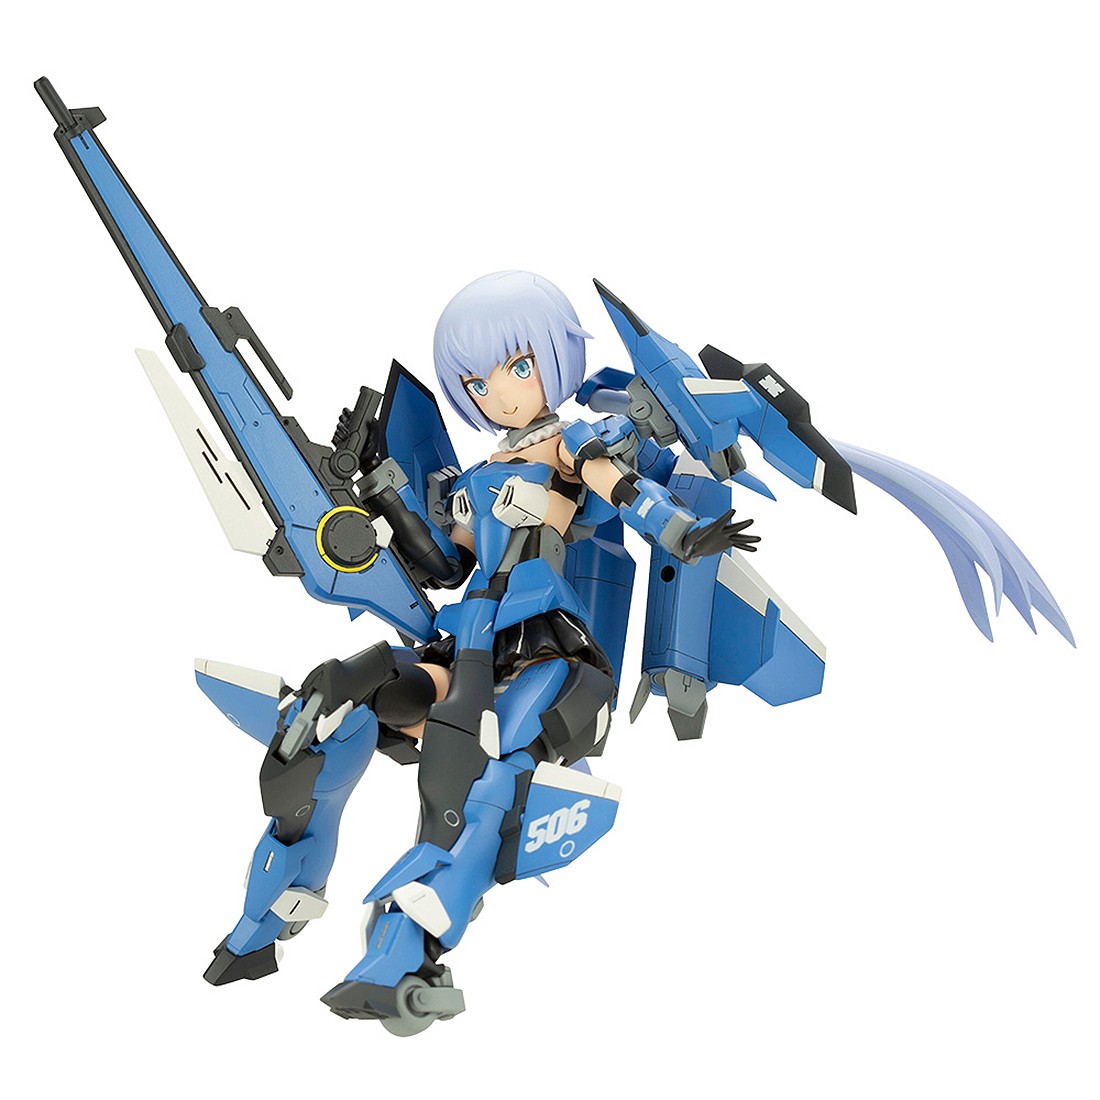 Kotobukiya Frame Arms Girl Stylet XF-3 Plus Plastic Model Kit (blue)